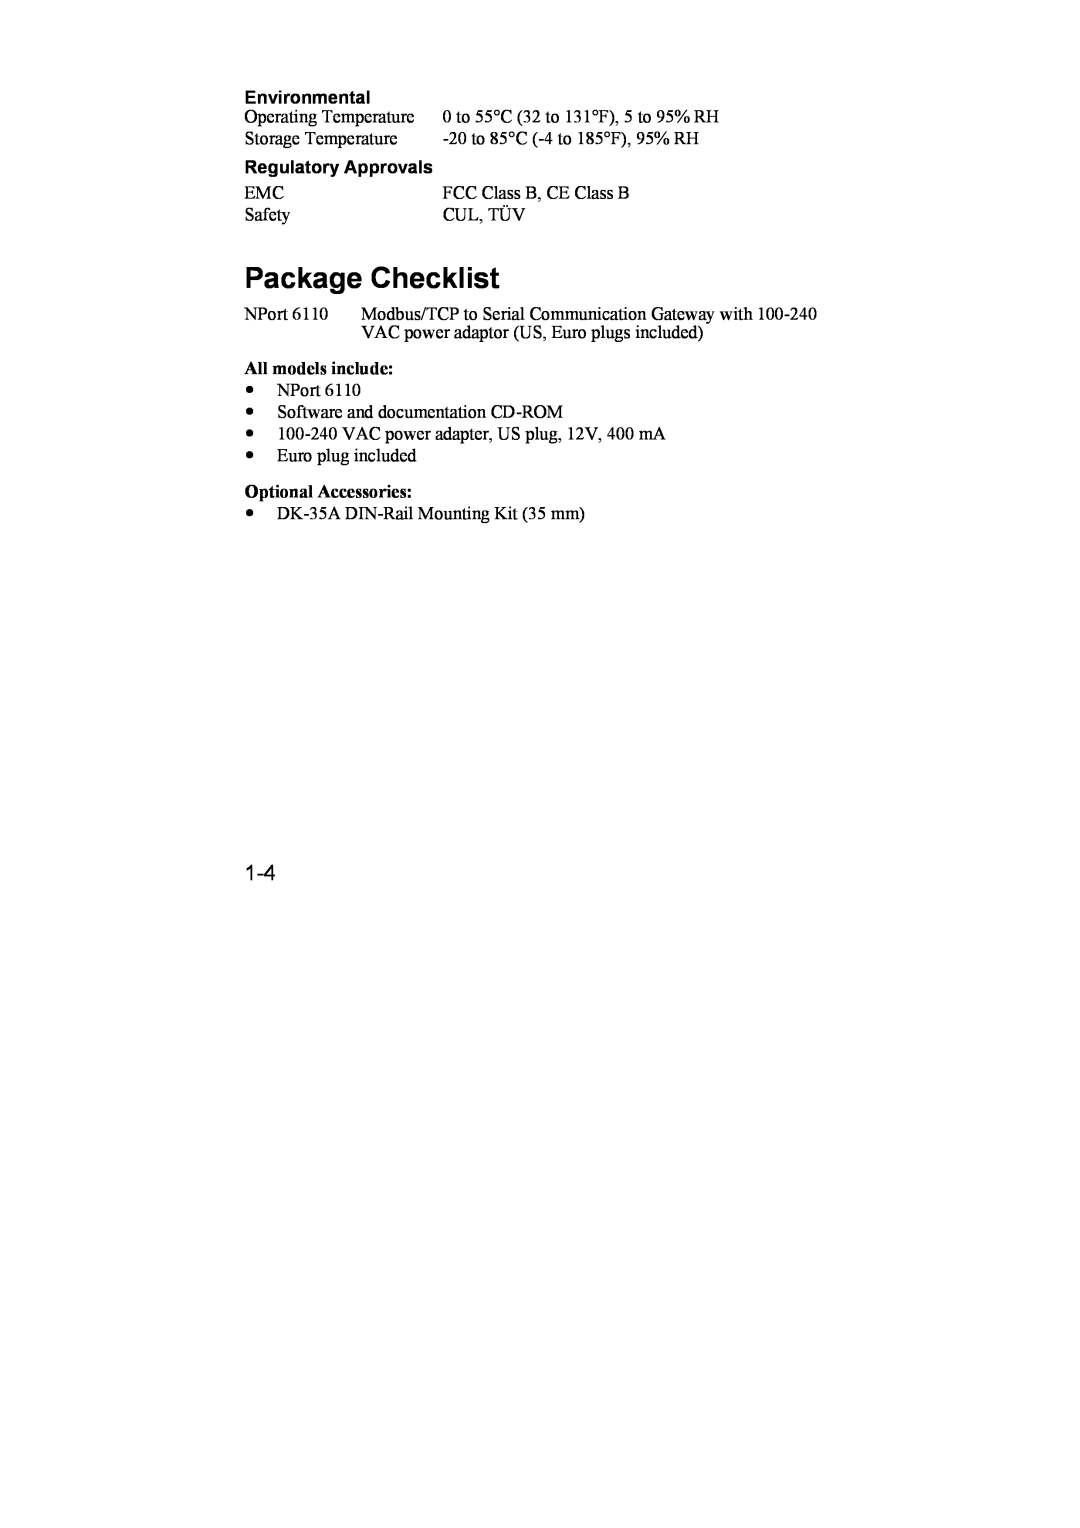 Moxa Technologies 6110 user manual Package Checklist, Environmental, Regulatory Approvals 